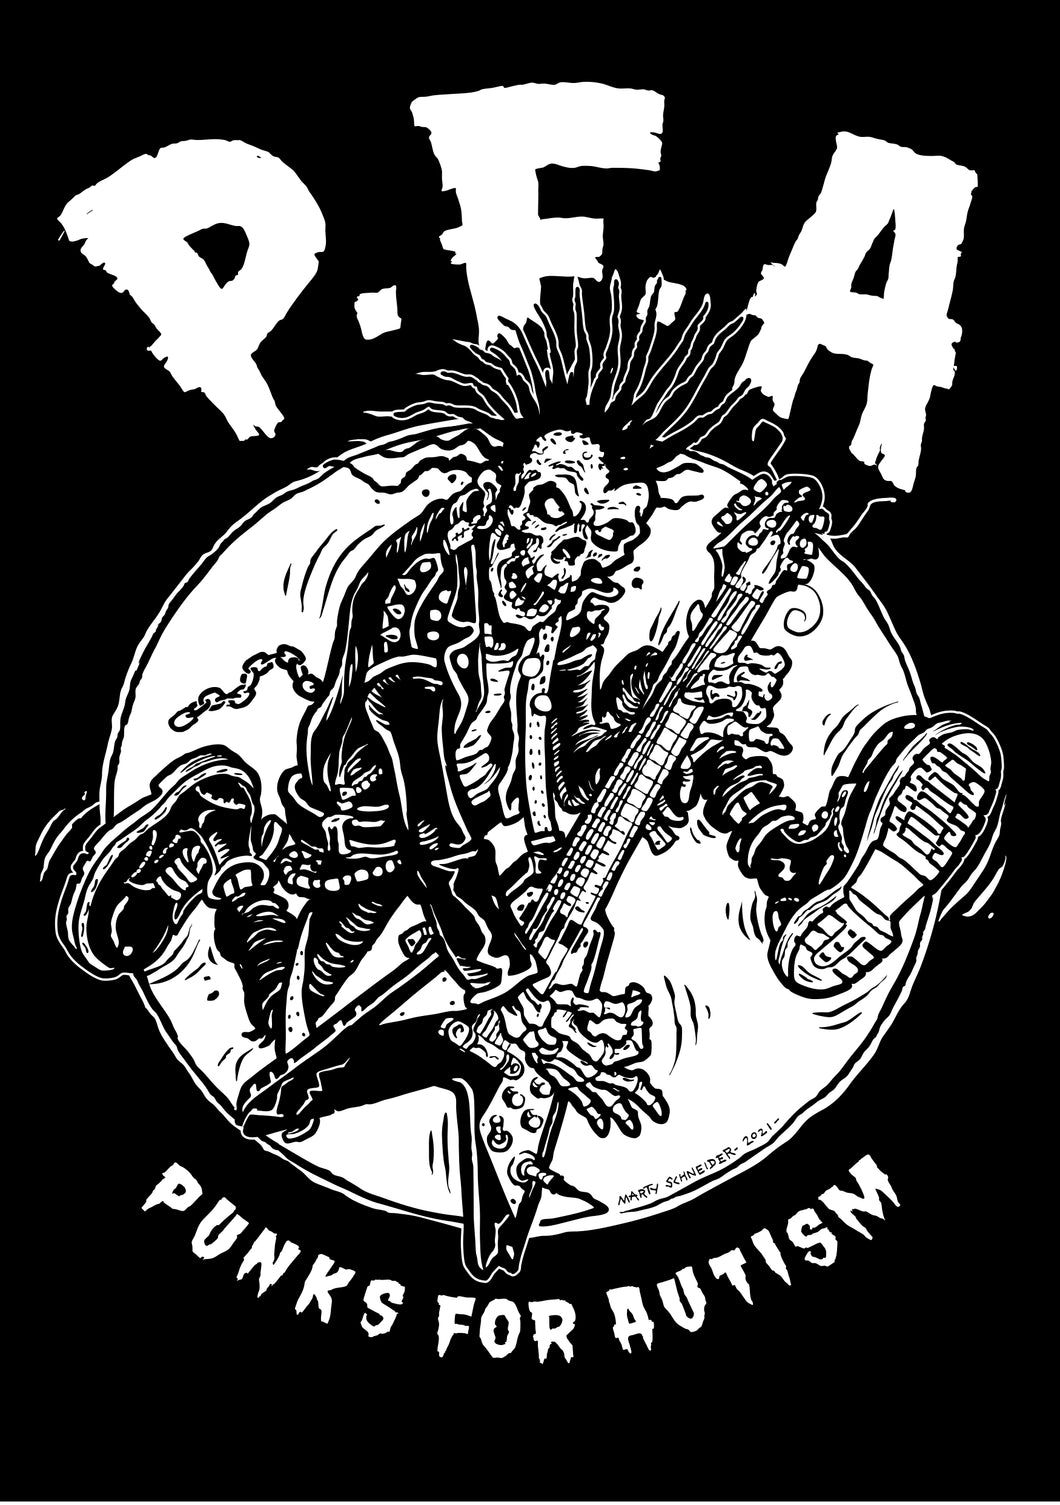 Punks for Autism - Monster Musician - Poster